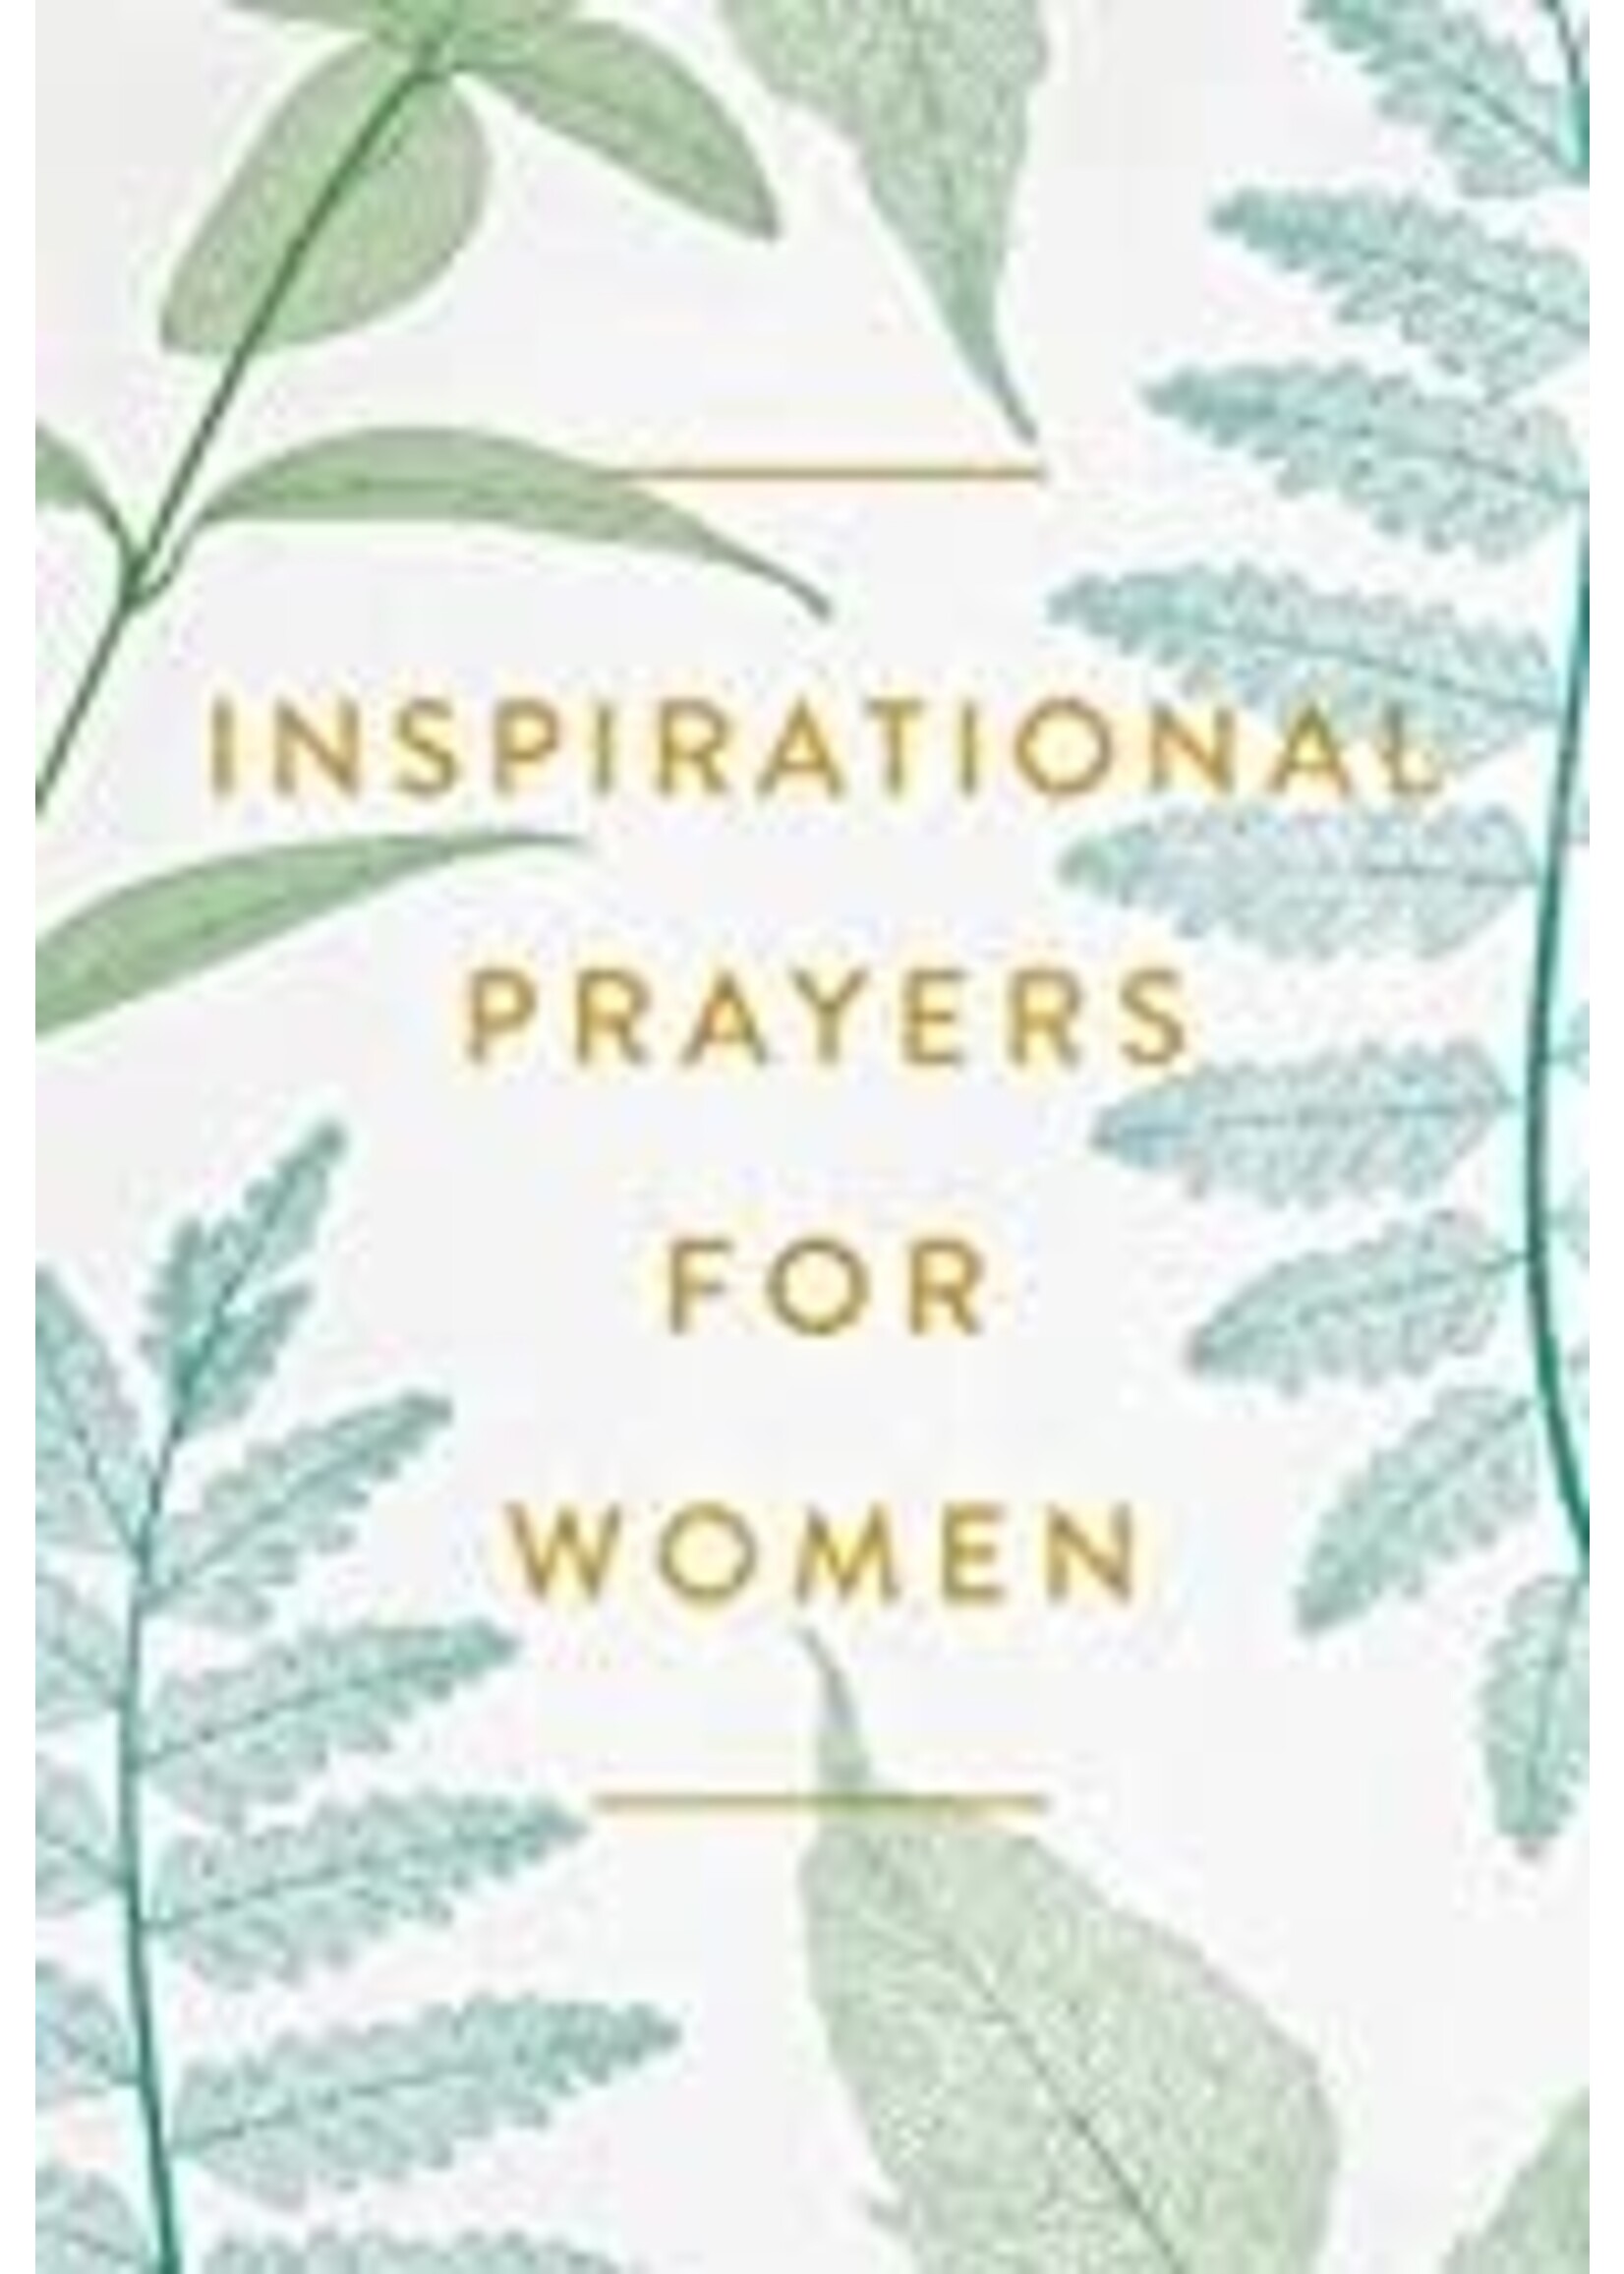 Inspirational Prayers for Women